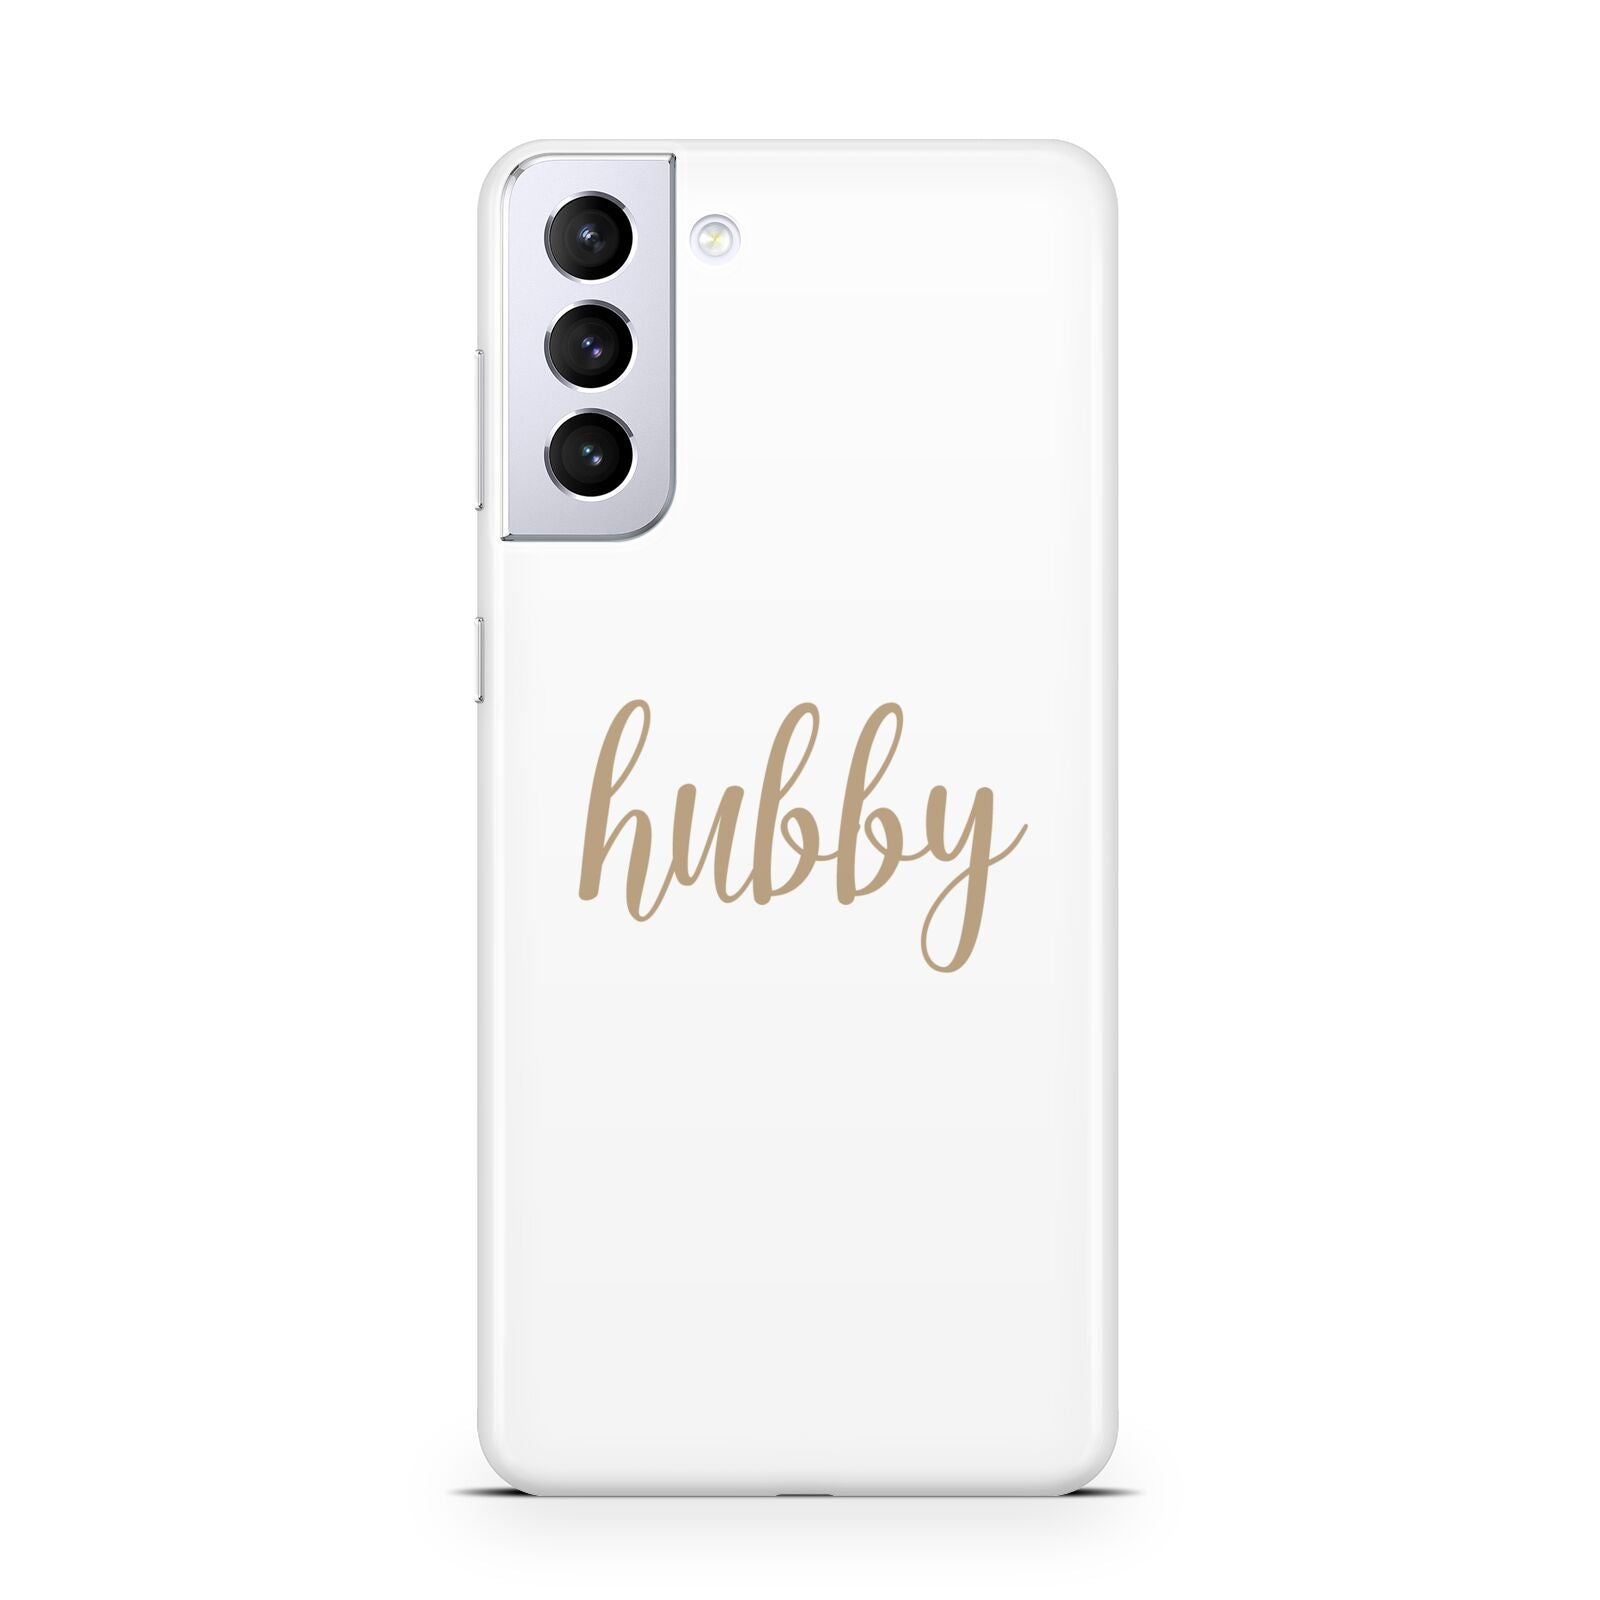 Hubby Samsung S21 Plus Phone Case